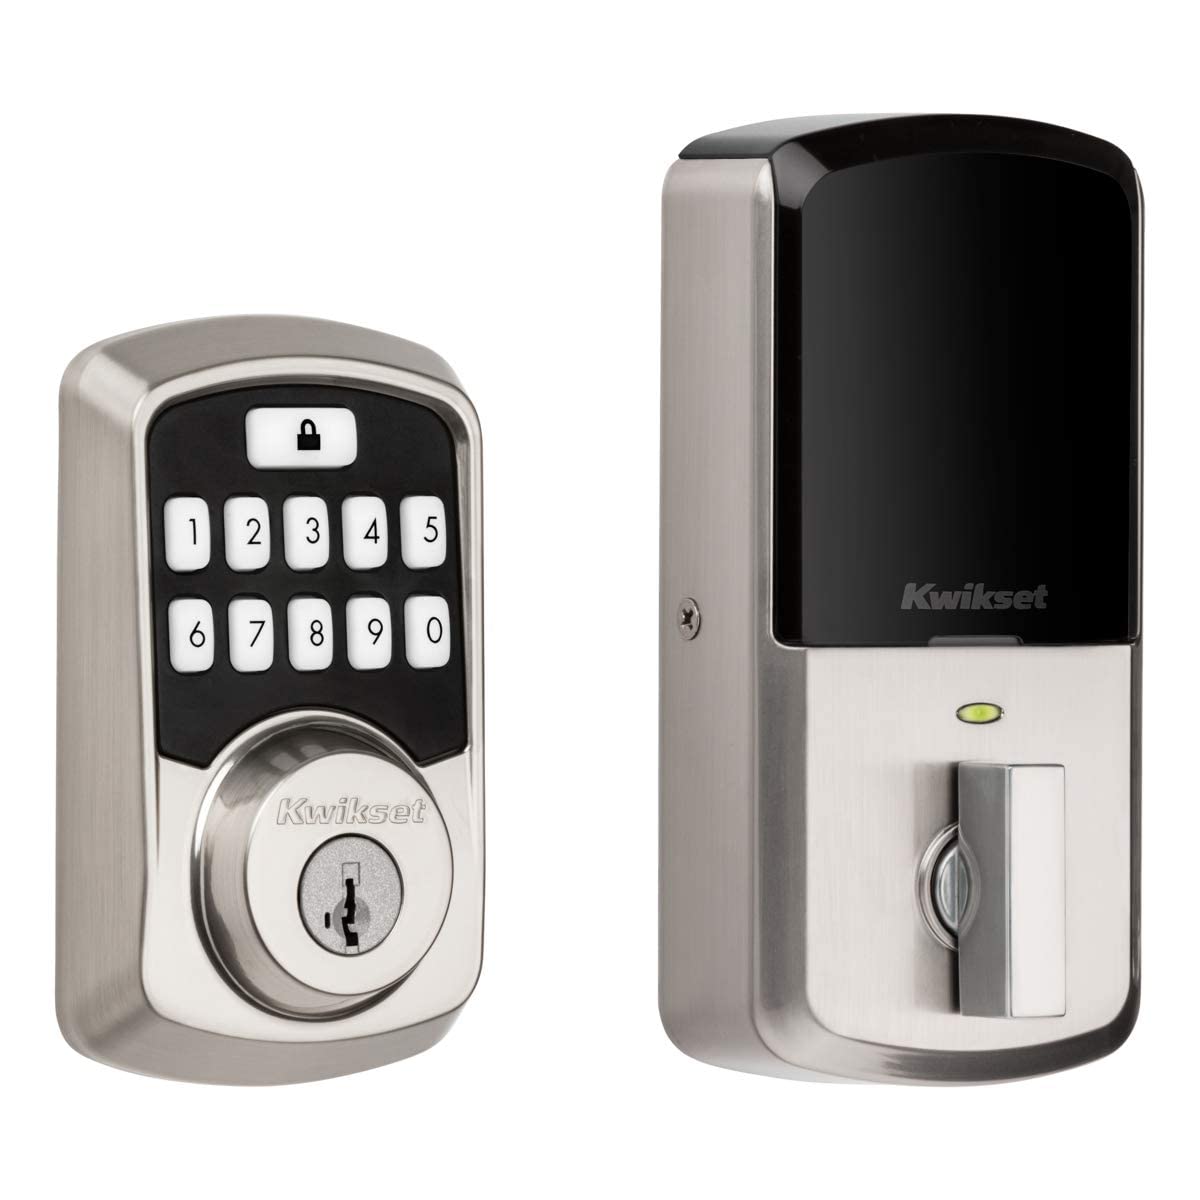 Kwikset 99420-001 Aura Bluetooth Programmable Keypad Door Lock Deadbolt Featuring SmartKey Security, Satin Nickel, List Price is $169, Now Only $59, You Save $110